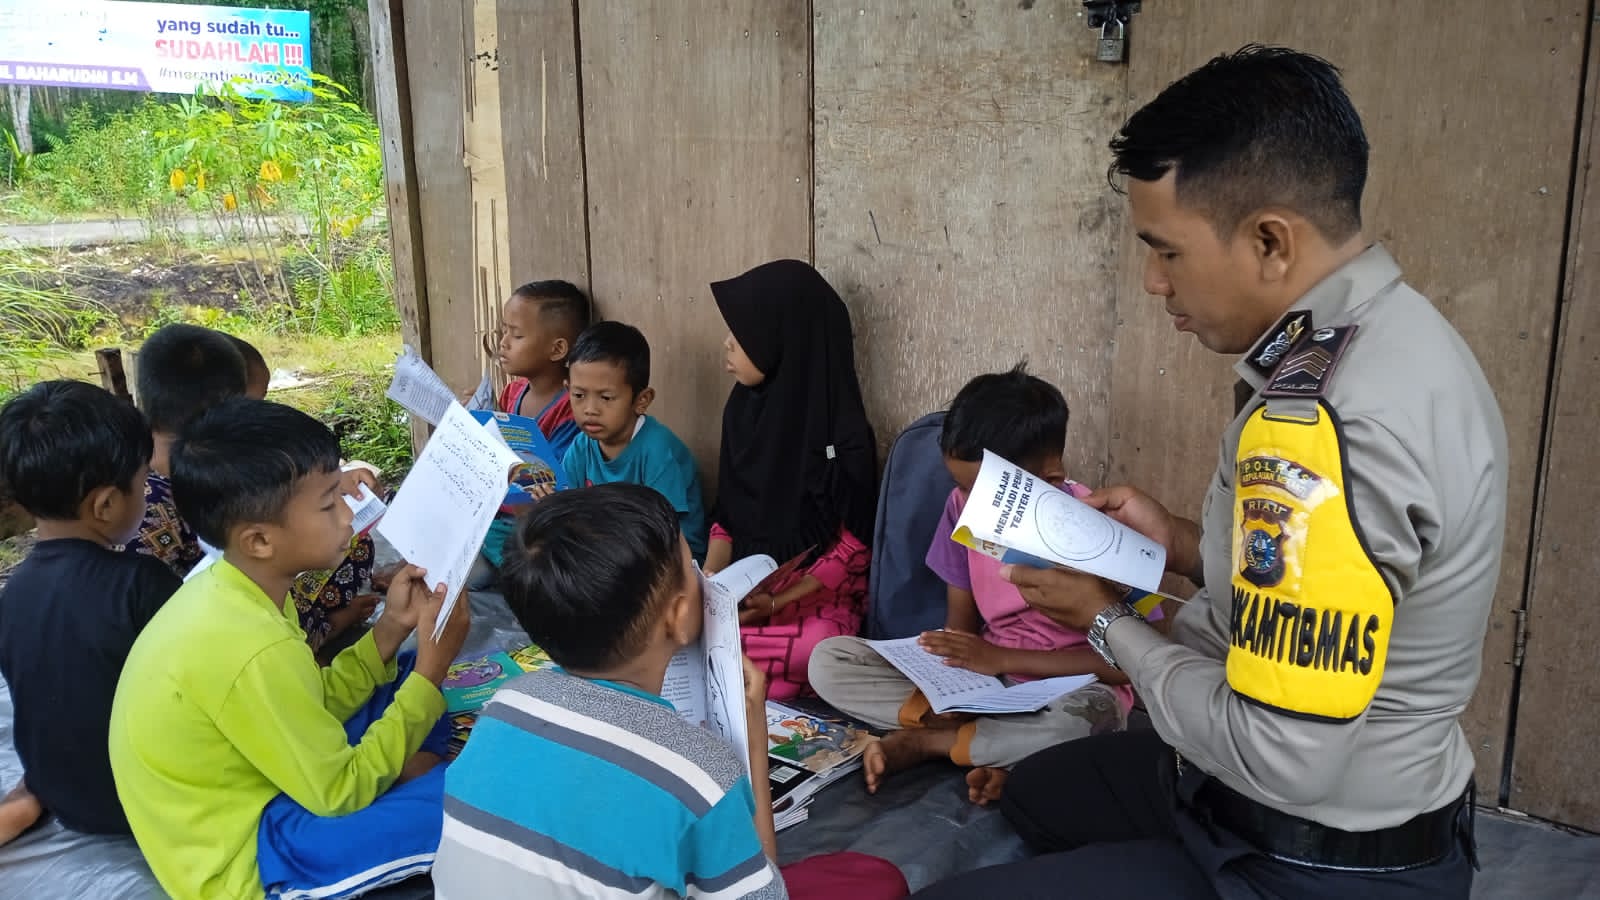 Permudah Akses Baca Anak-anak Pulau Terluar, Bhabinkamtibmas Polsek Rangsang ini Sediakan Pusling